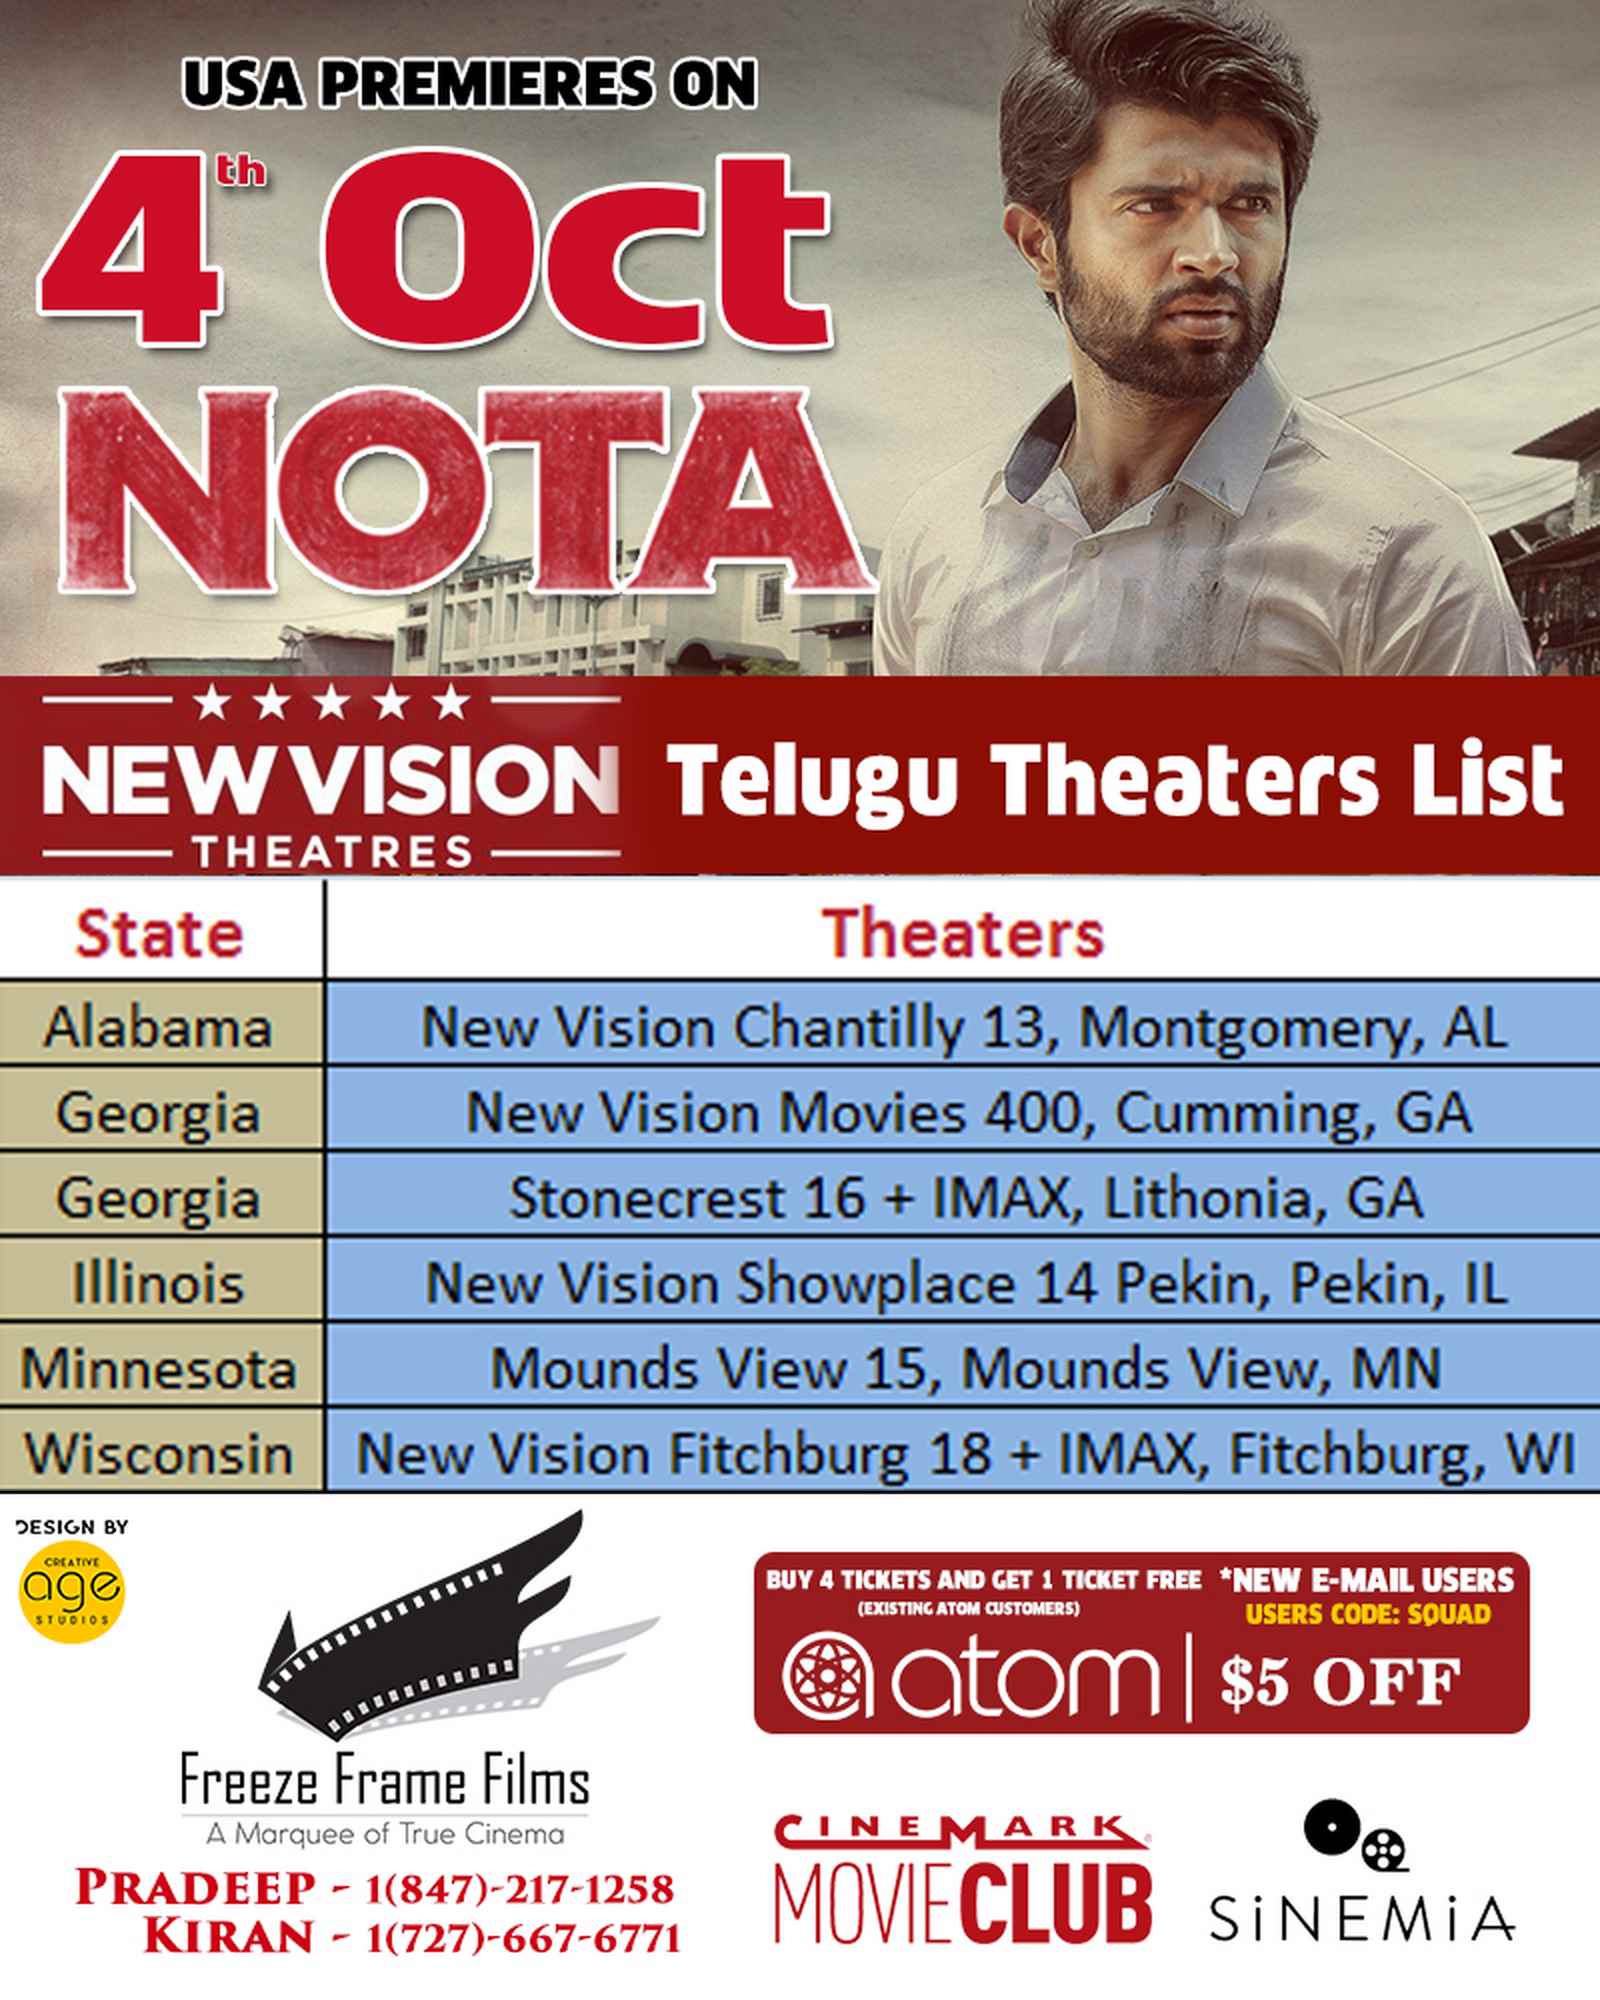 Nota Overseas Theatres List USA (1)